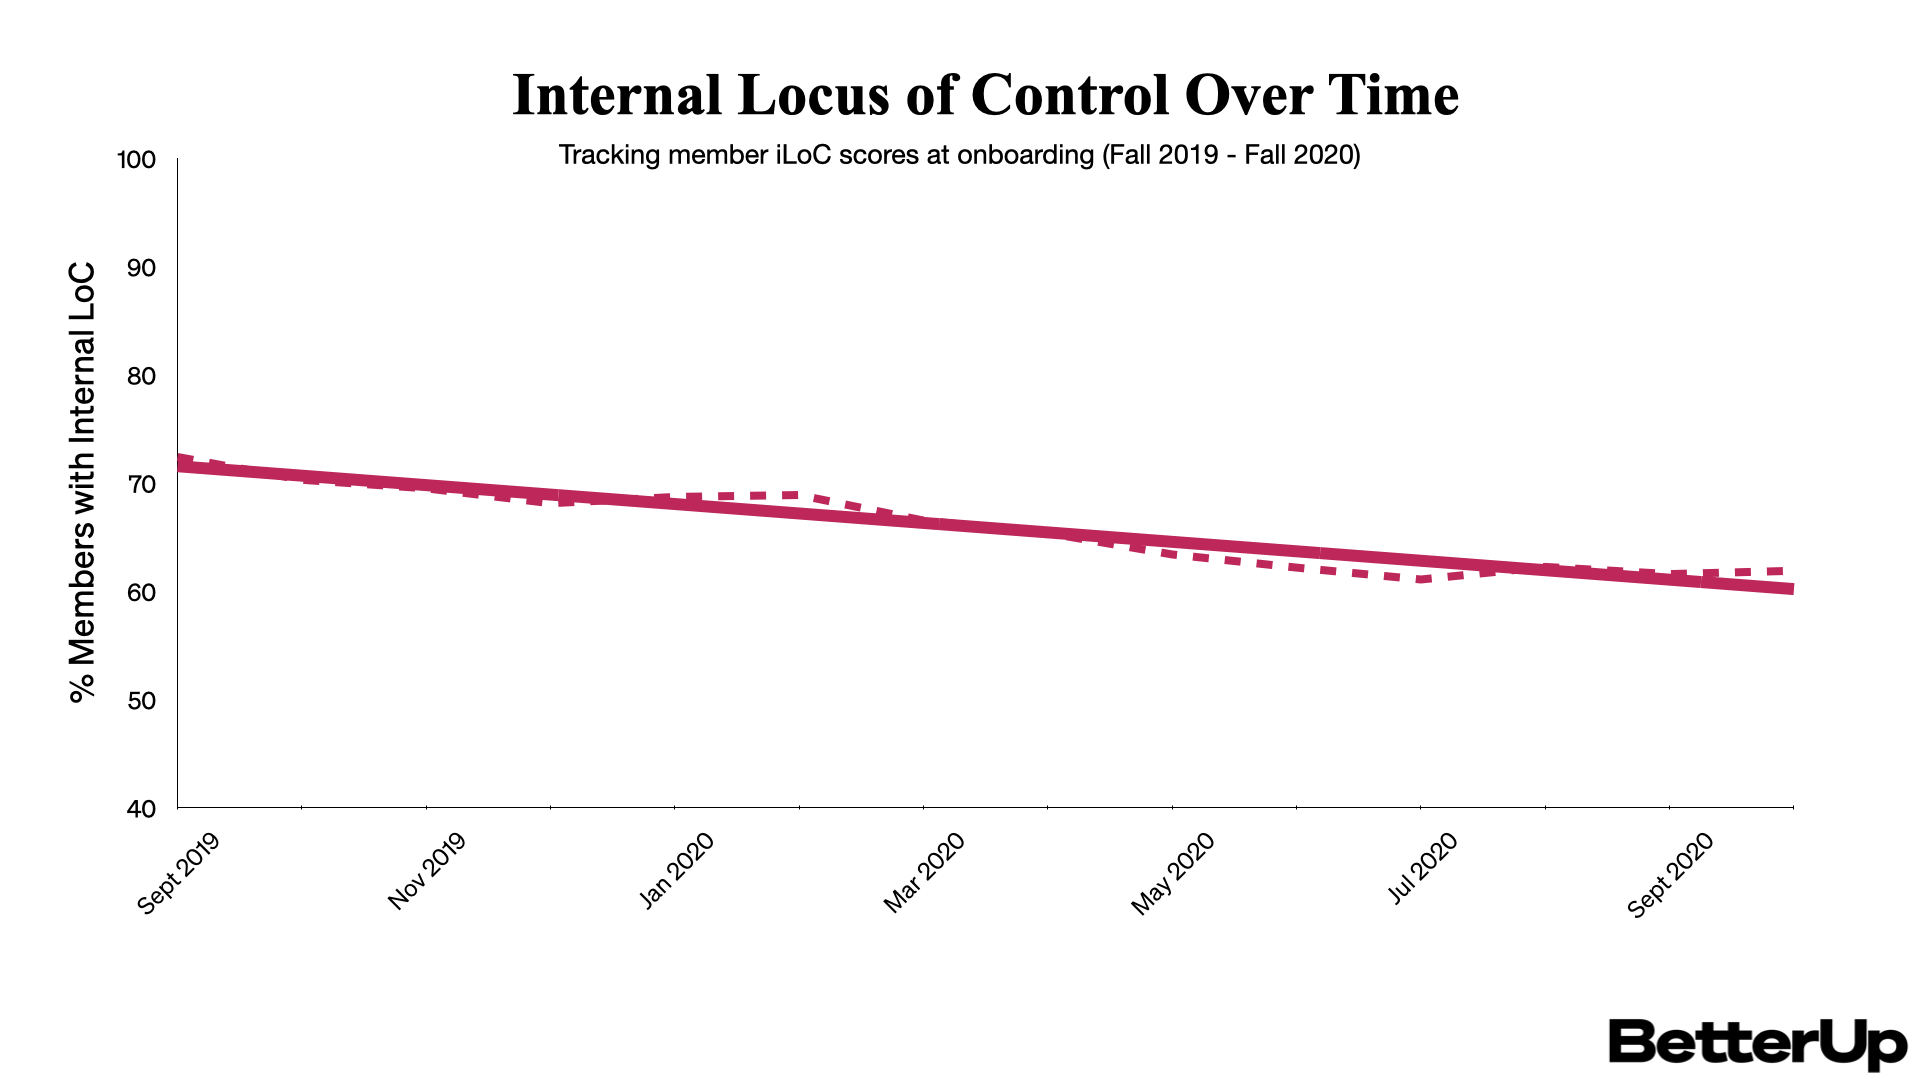 Graph of member internal locust of control time decreasing from september 2019 to september 2020